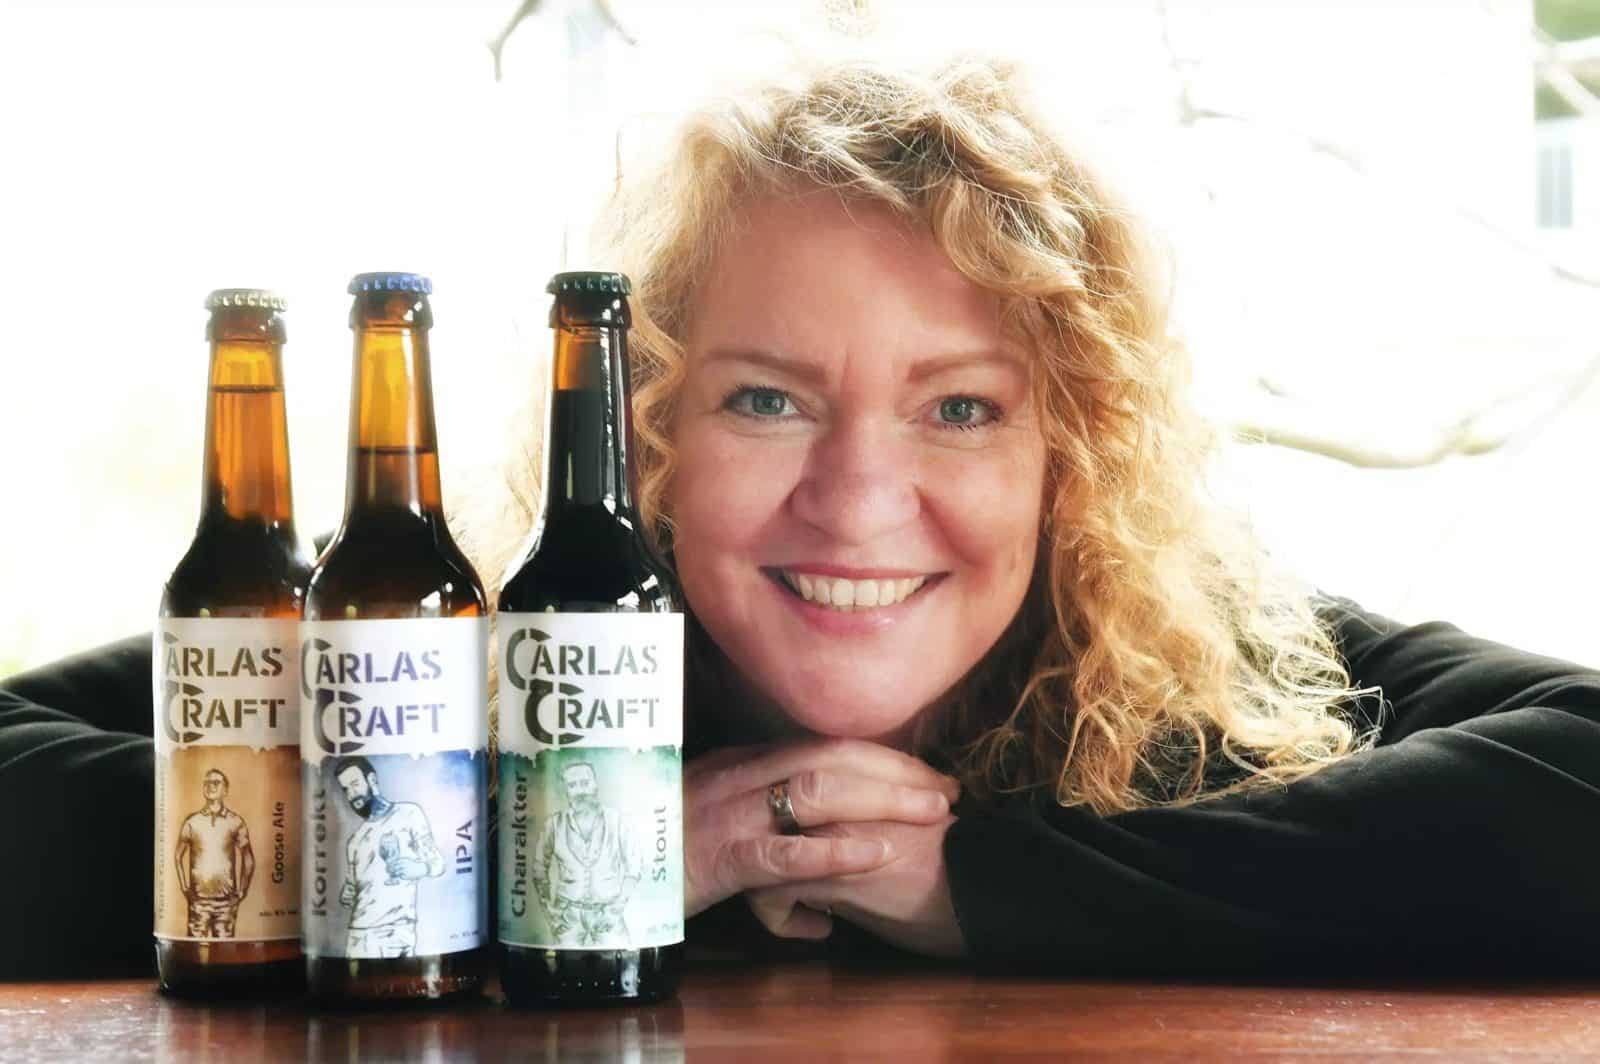 Carla van Gaalen präsentiert drei Craft-Biere in Flaschen.